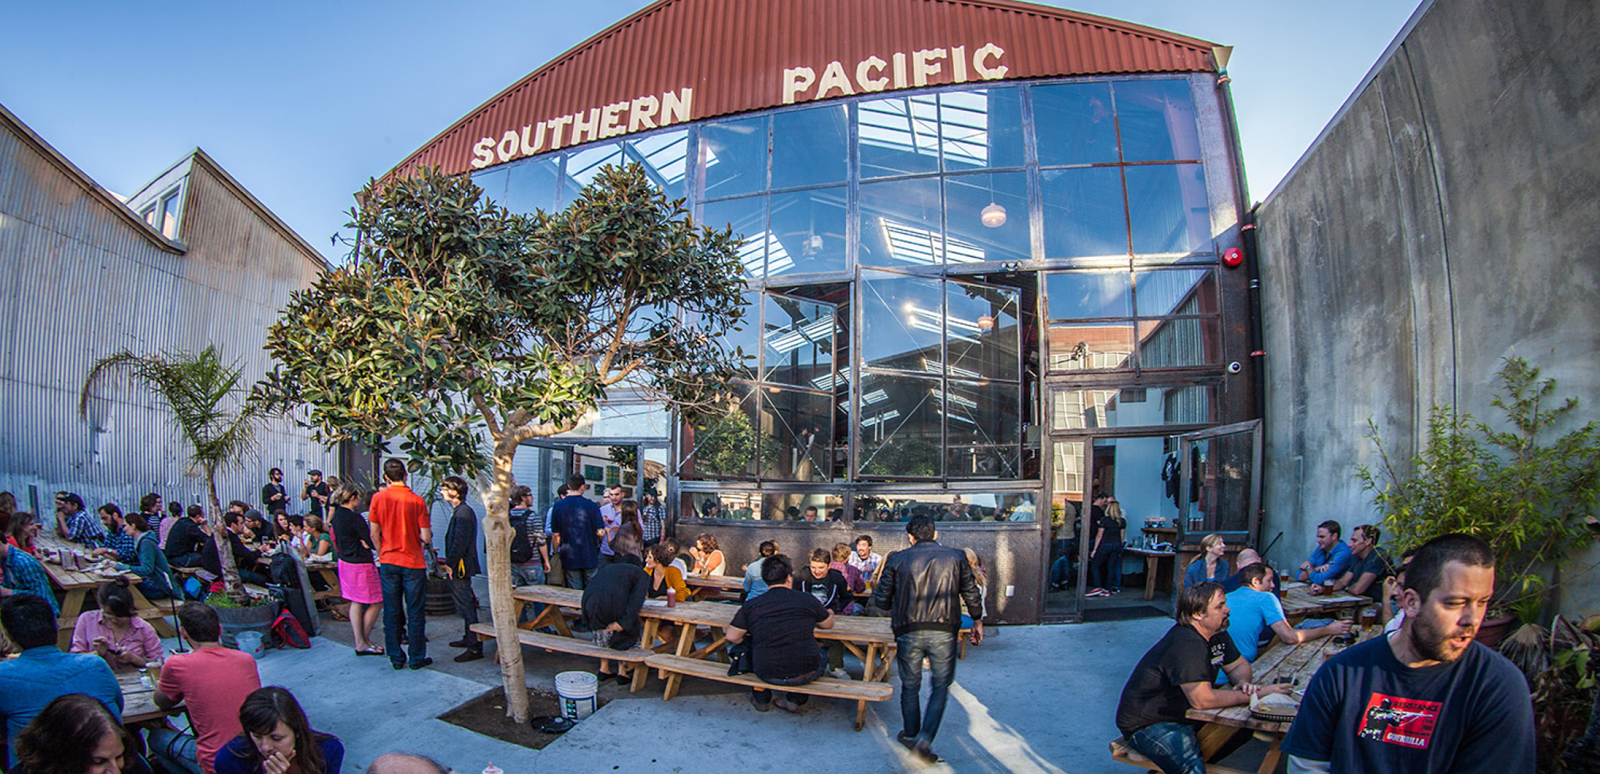 11 Best Beer Gardens In The San Francisco Bay Area